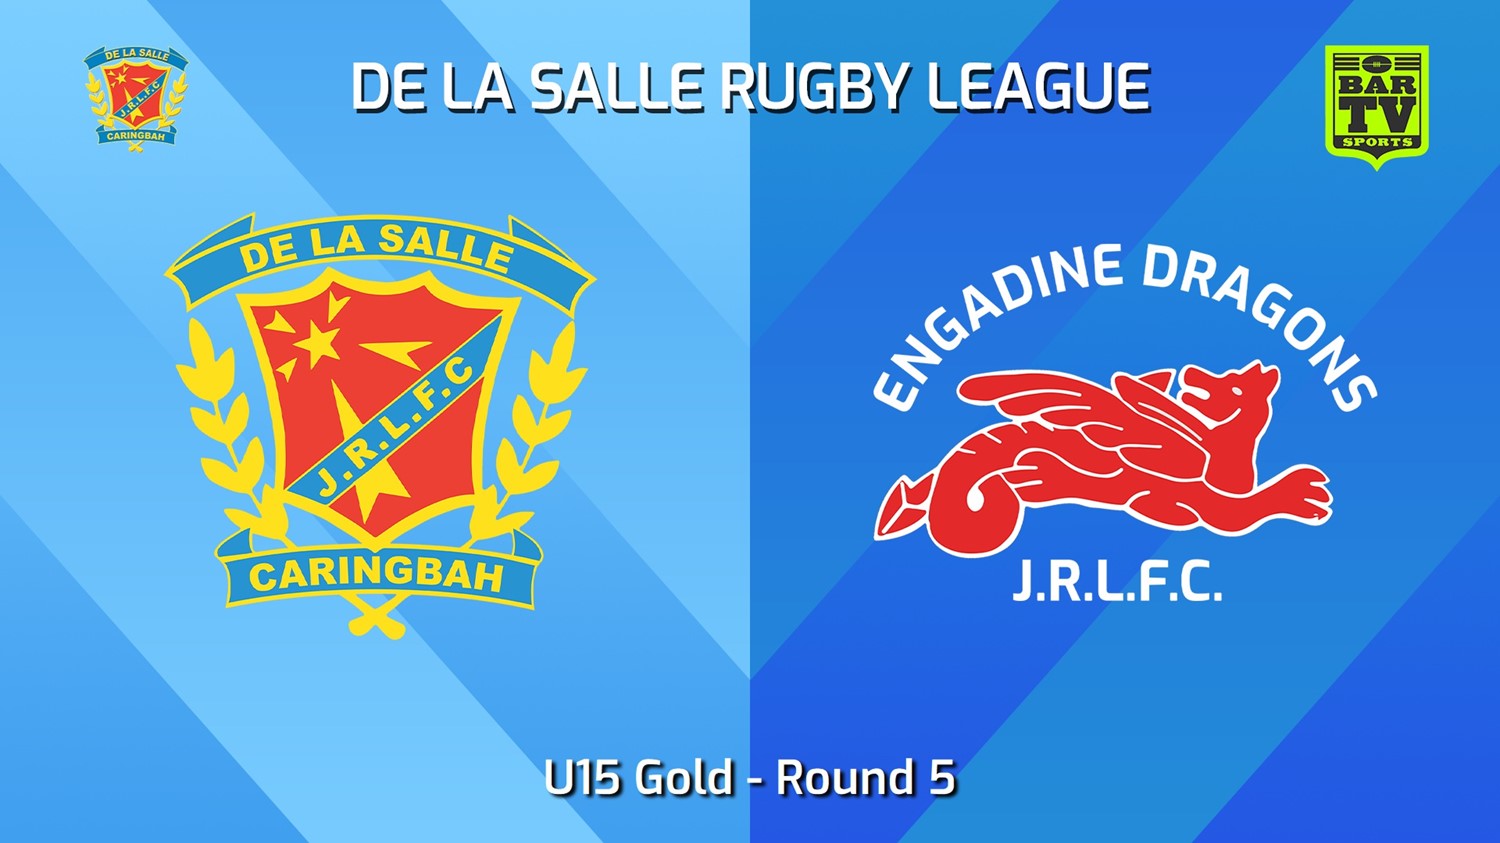 240519-video-De La Salle Round 5 - U15 Gold - De La Salle v Engadine Dragons Slate Image